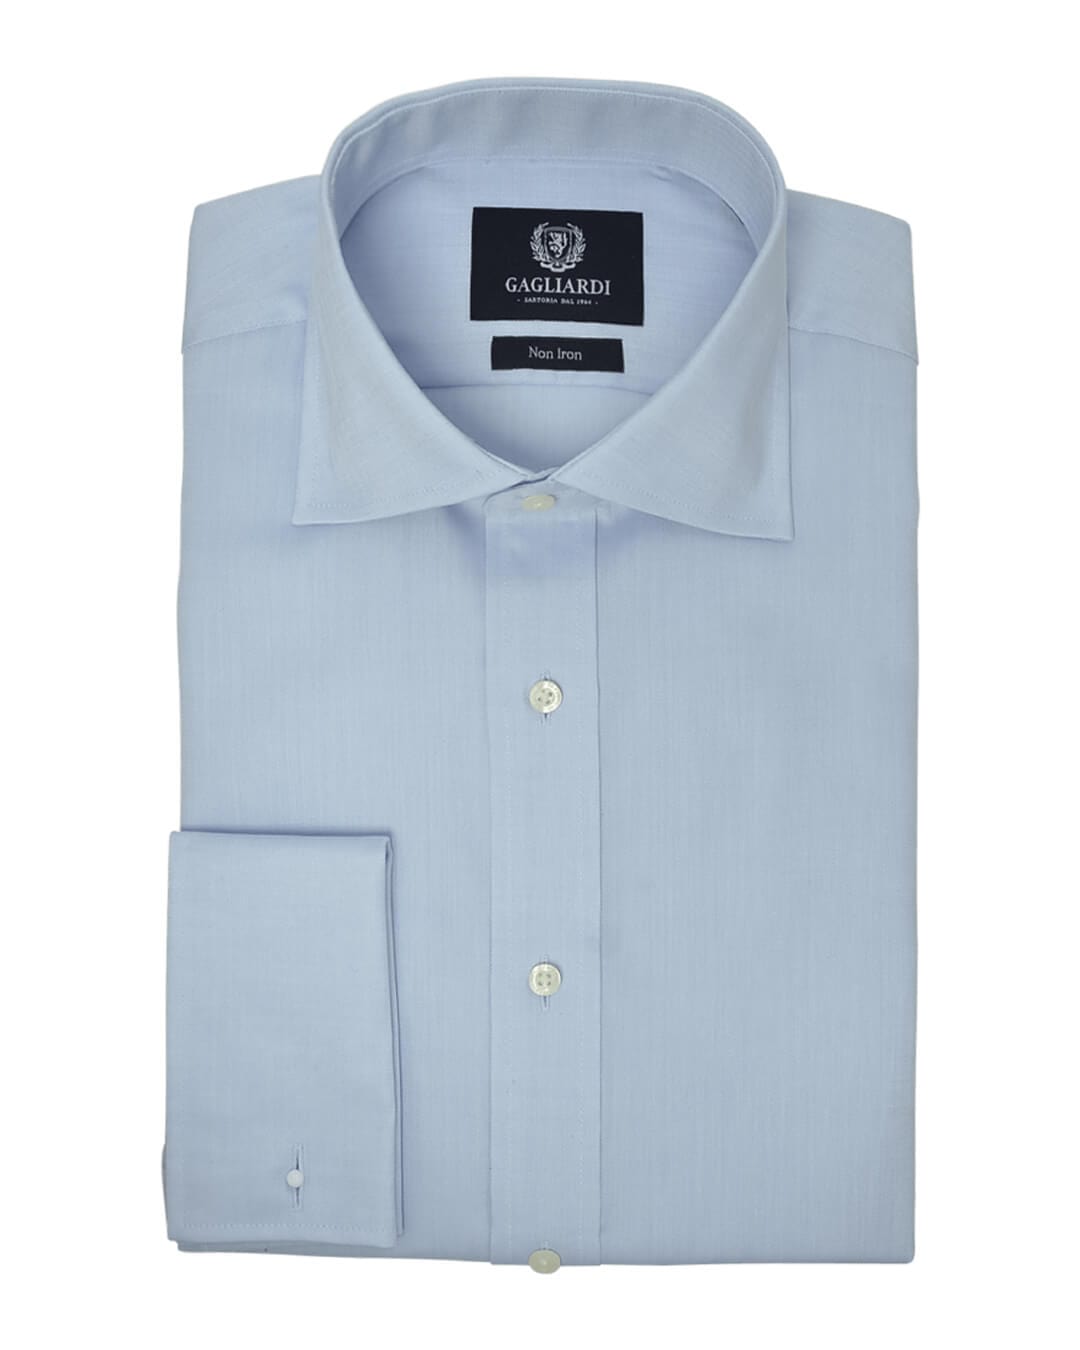 Gagliardi Shirts Gagliardi Blue Herringbone Tailored Fit Classic Collar Double Cuffed Shirt